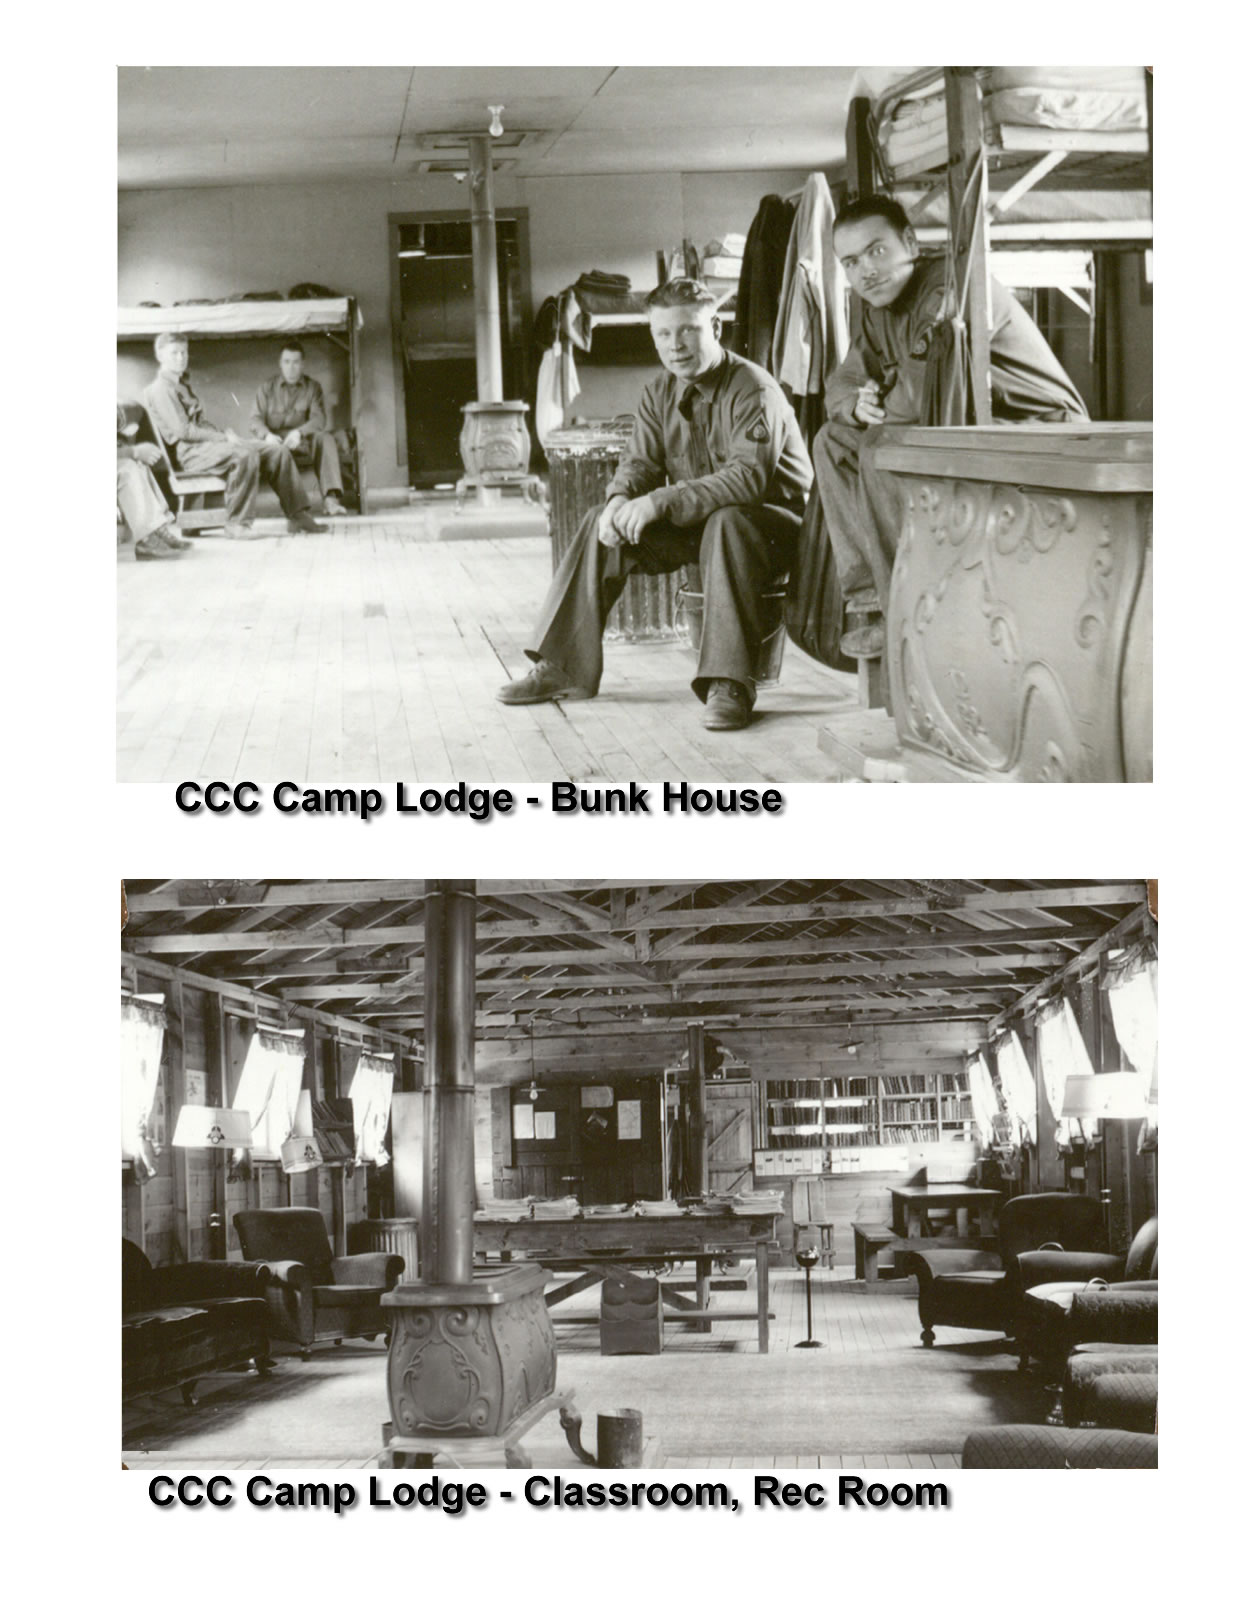 CCC Camp Lodge - Bunk House - Rec Room